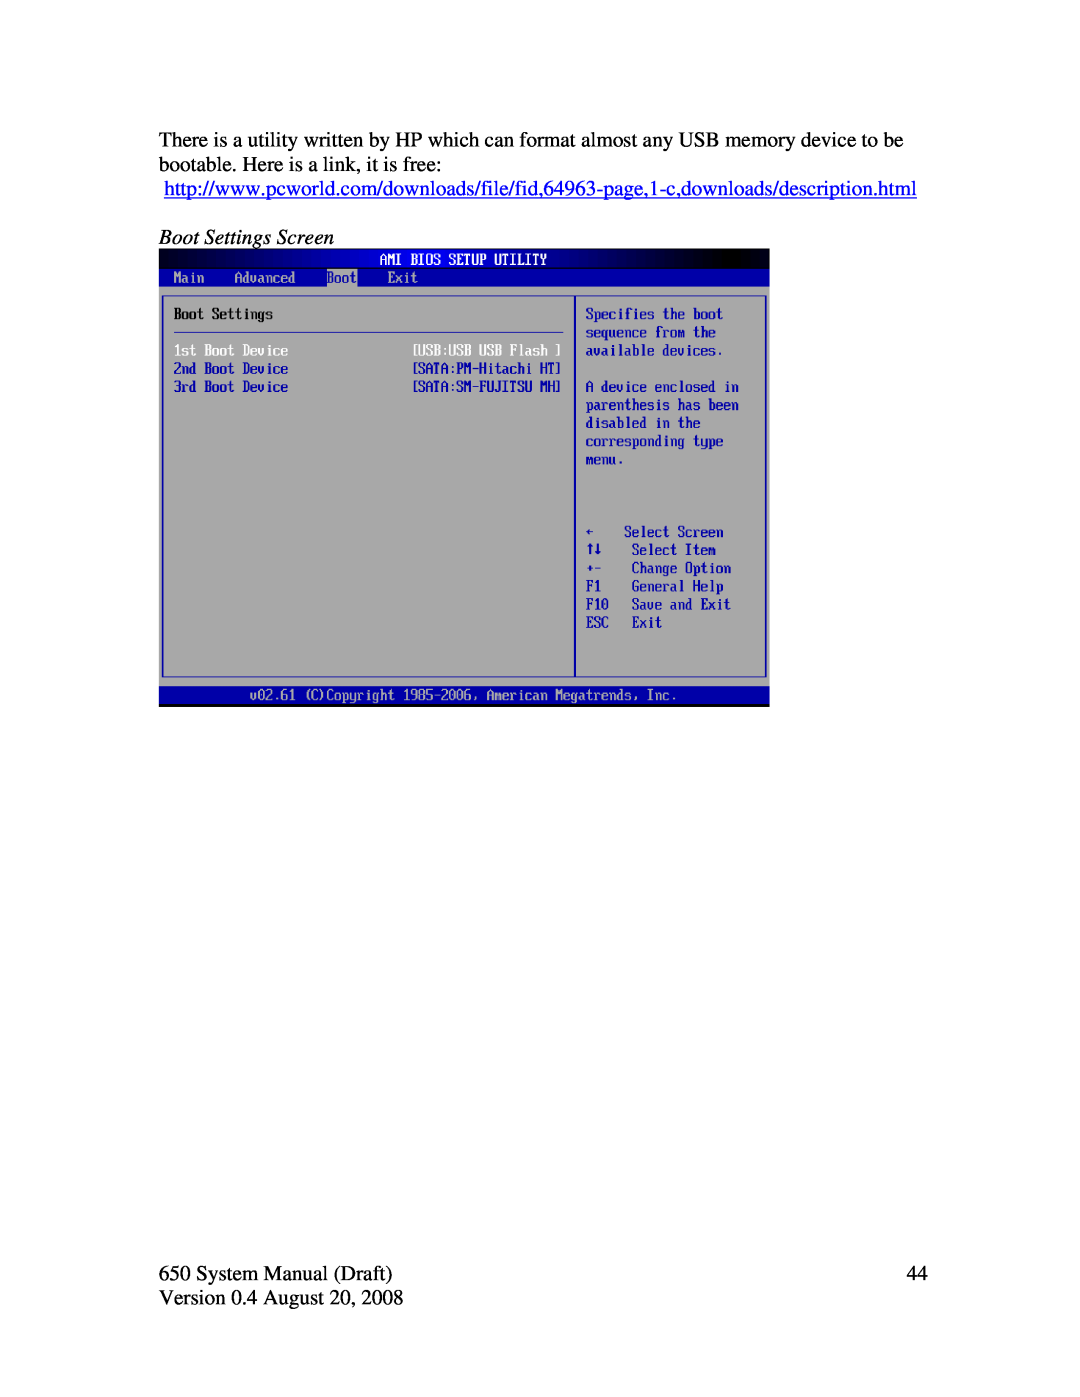 Intel J2 650 system manual Boot Settings Screen, System Manual Draft, Version 0.4 August 20 